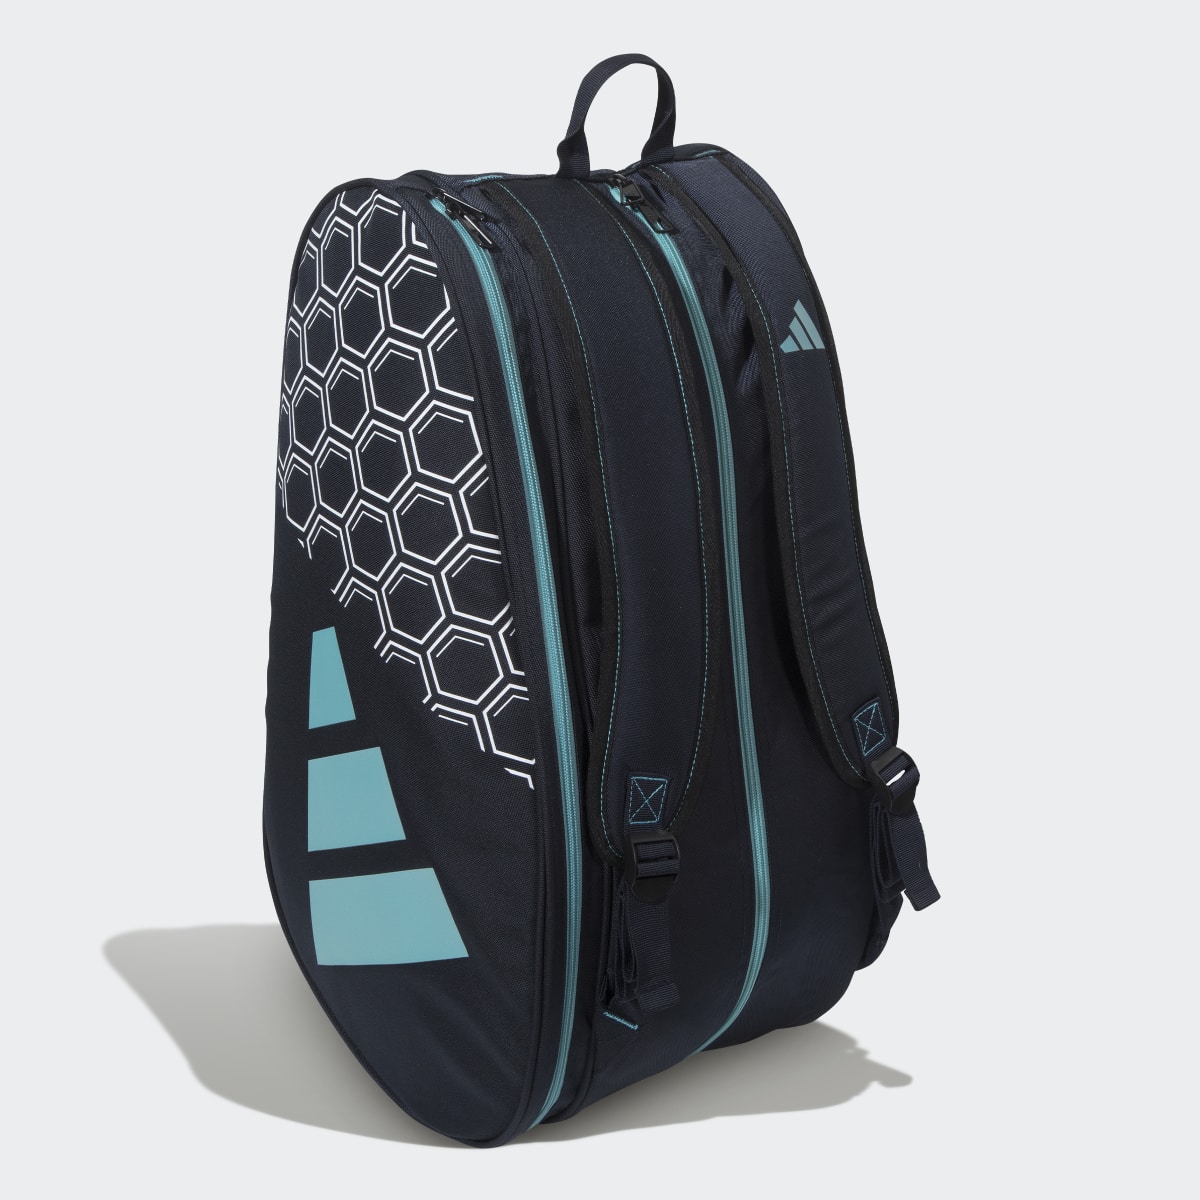 Adidas Control 3.0 Racket Bag. 3